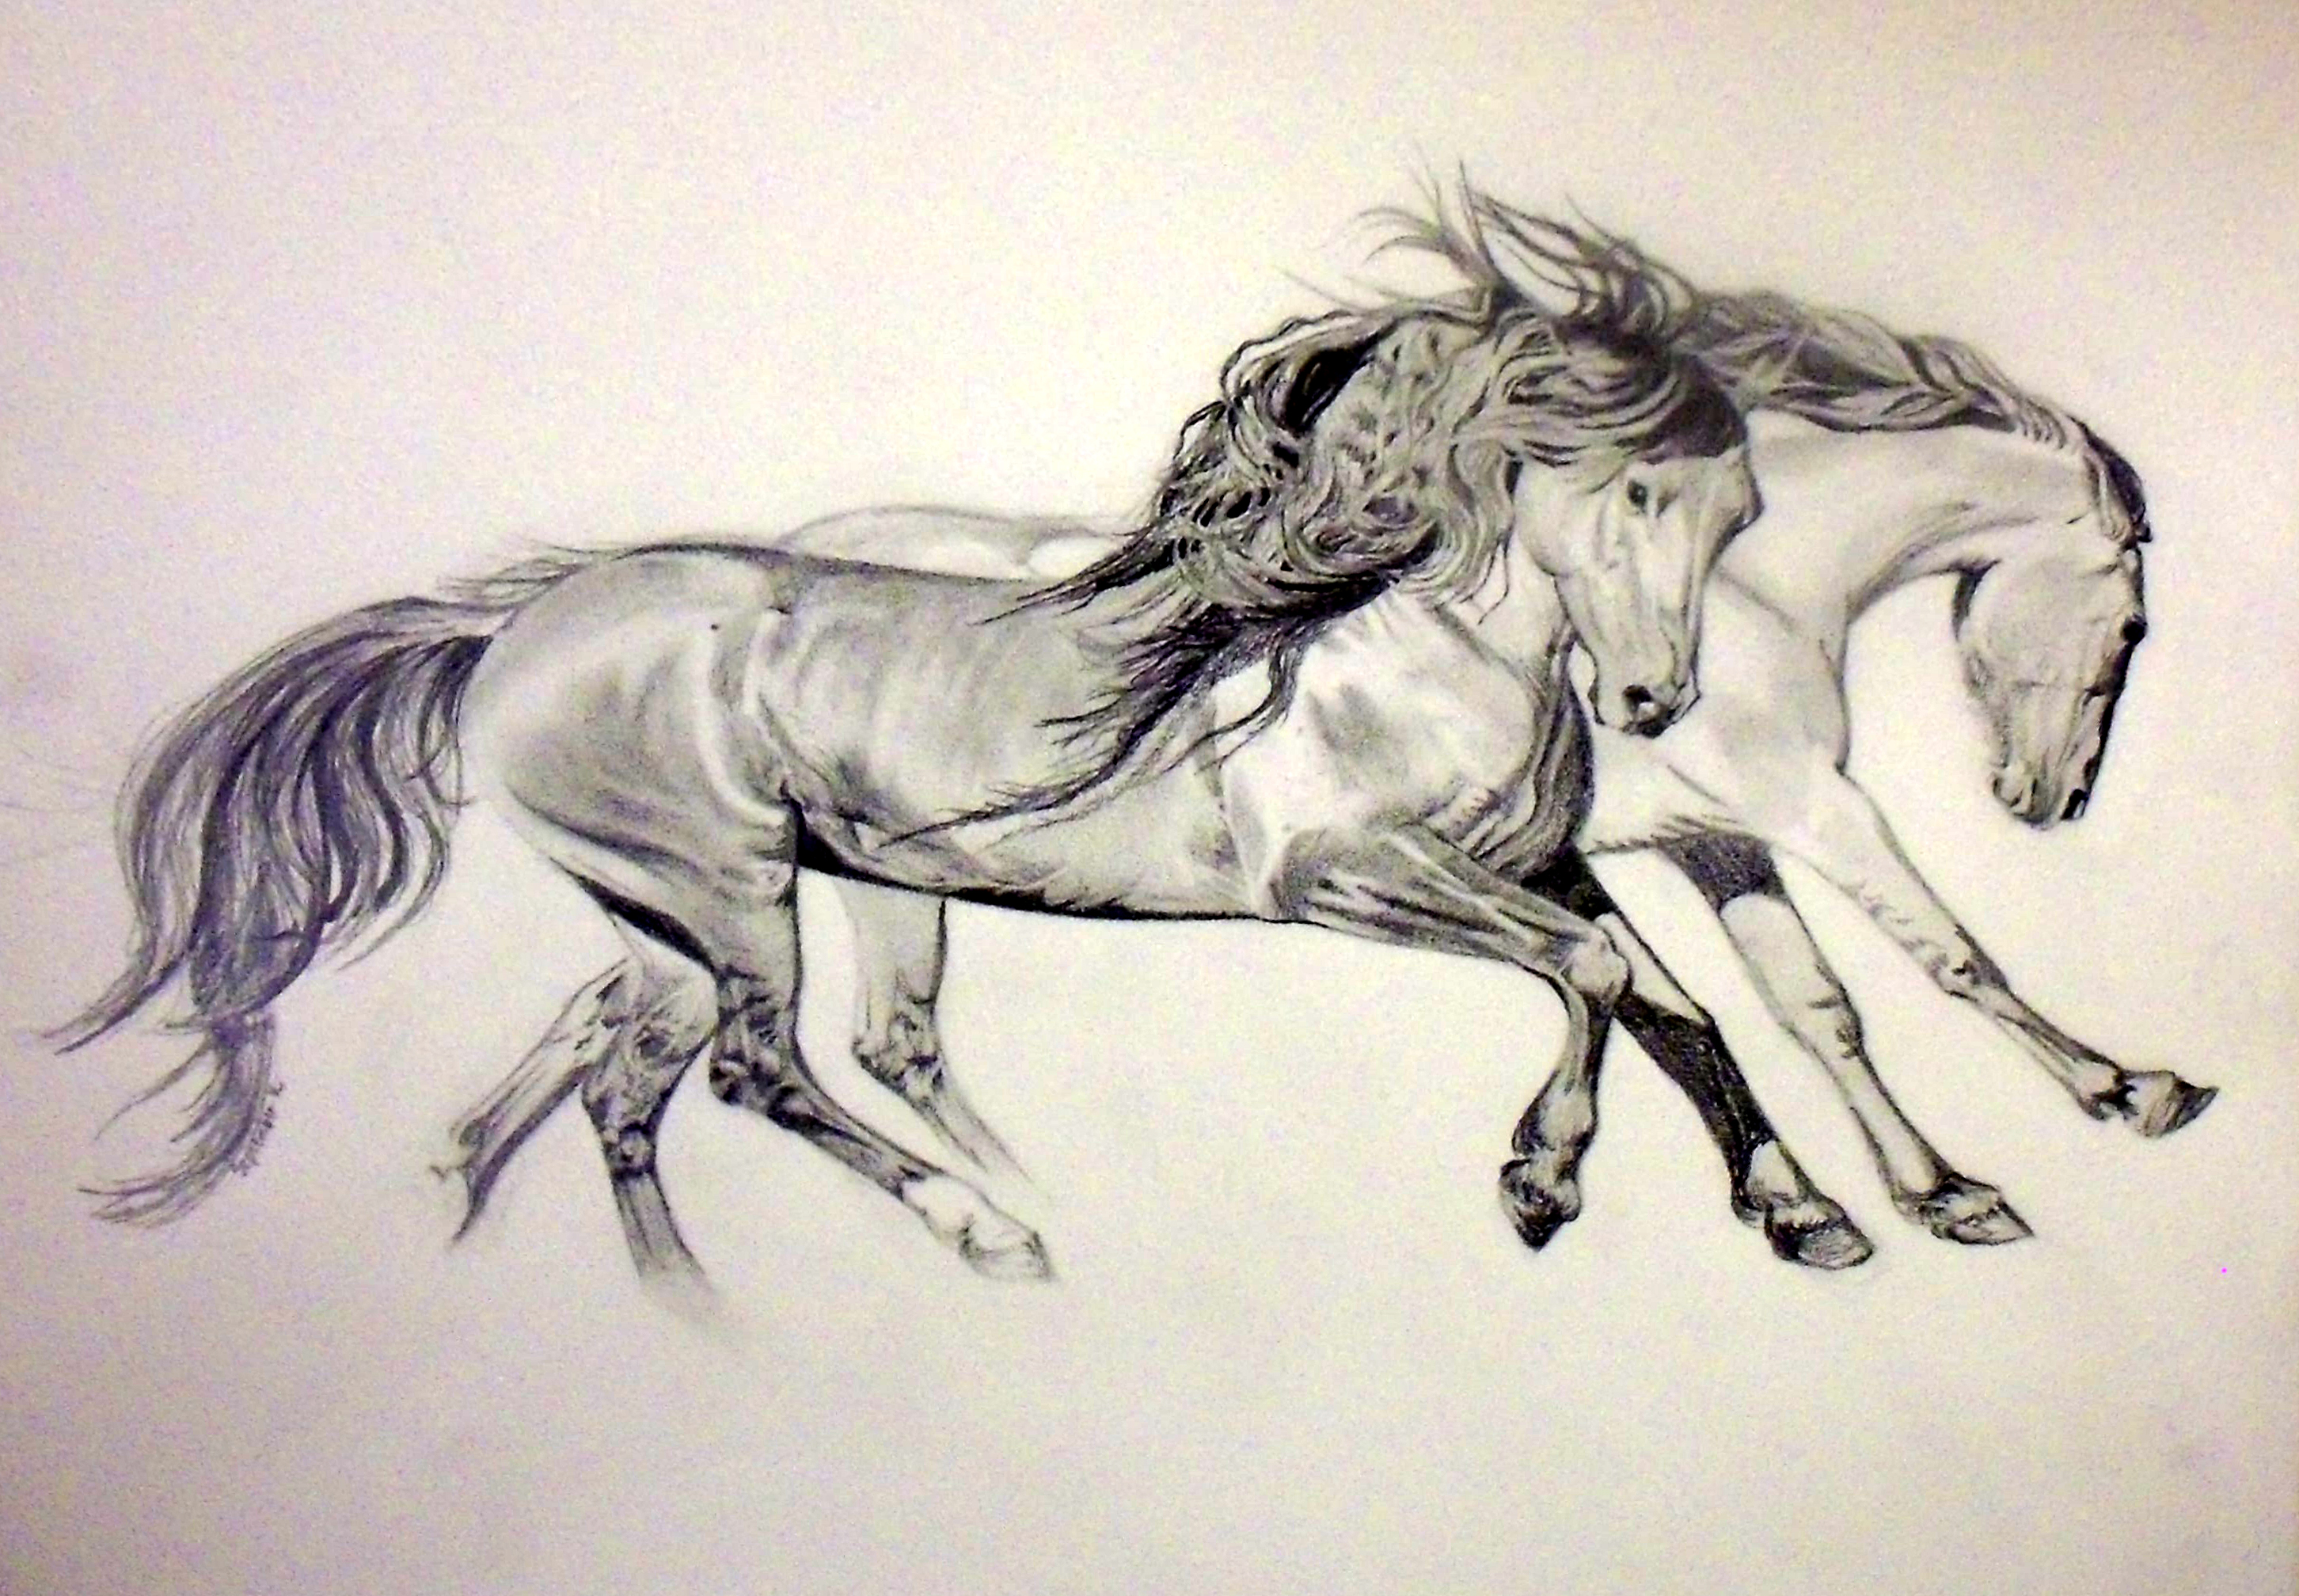 Sketches Of Horses Running - Miinullekko